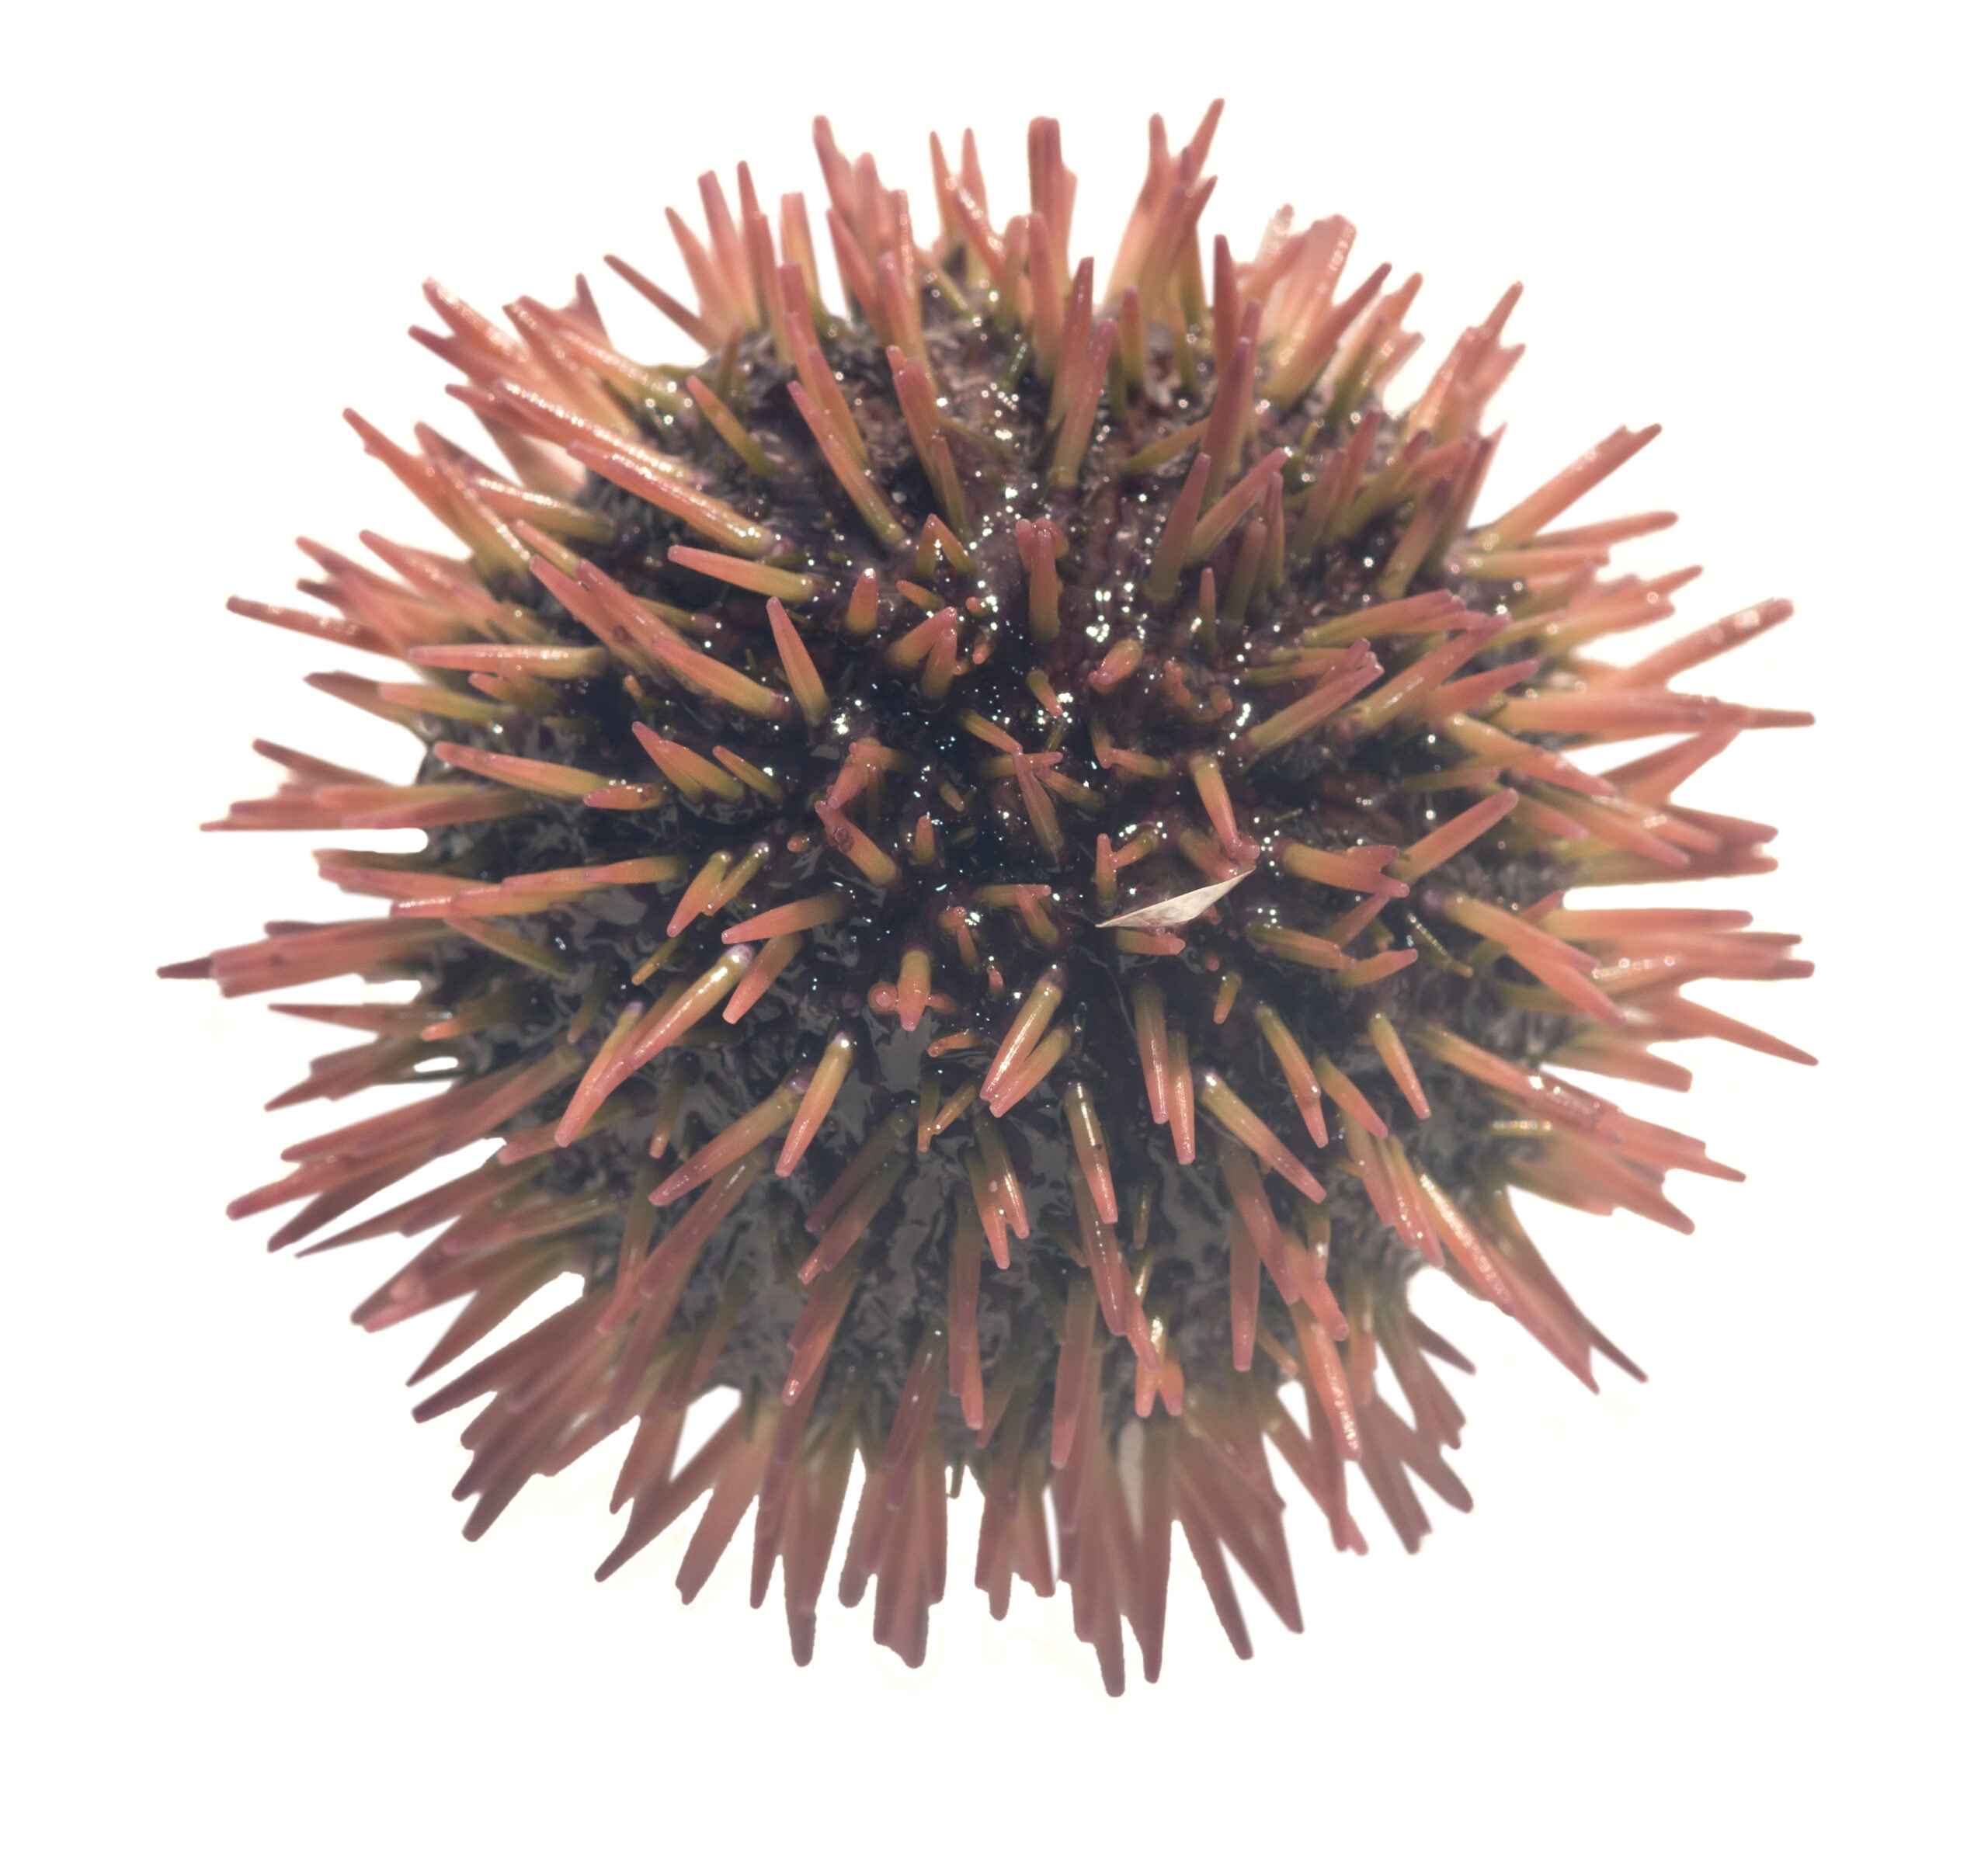 The Pincushion Sea Urchin: A Beginner's Best | Invertebrates | AlgaeBarn